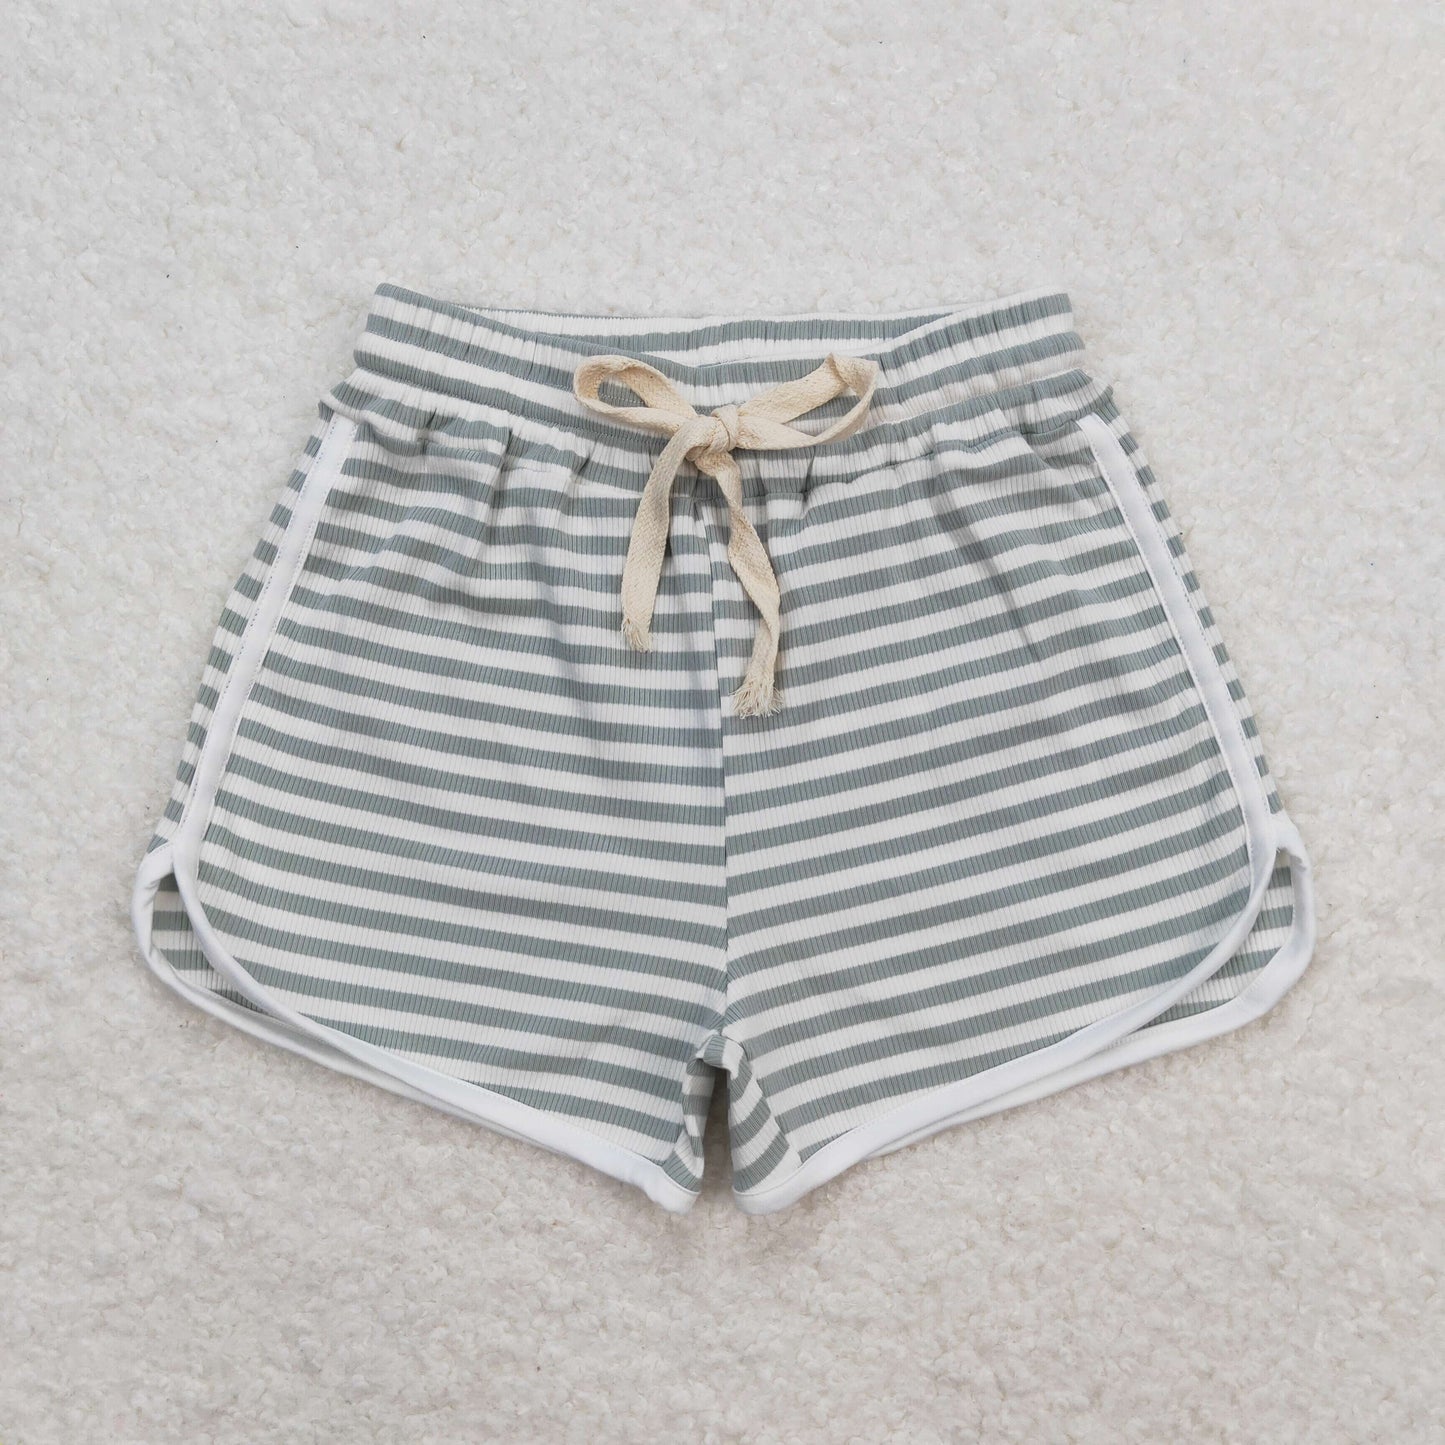 SS0328 Striped gray blue shorts